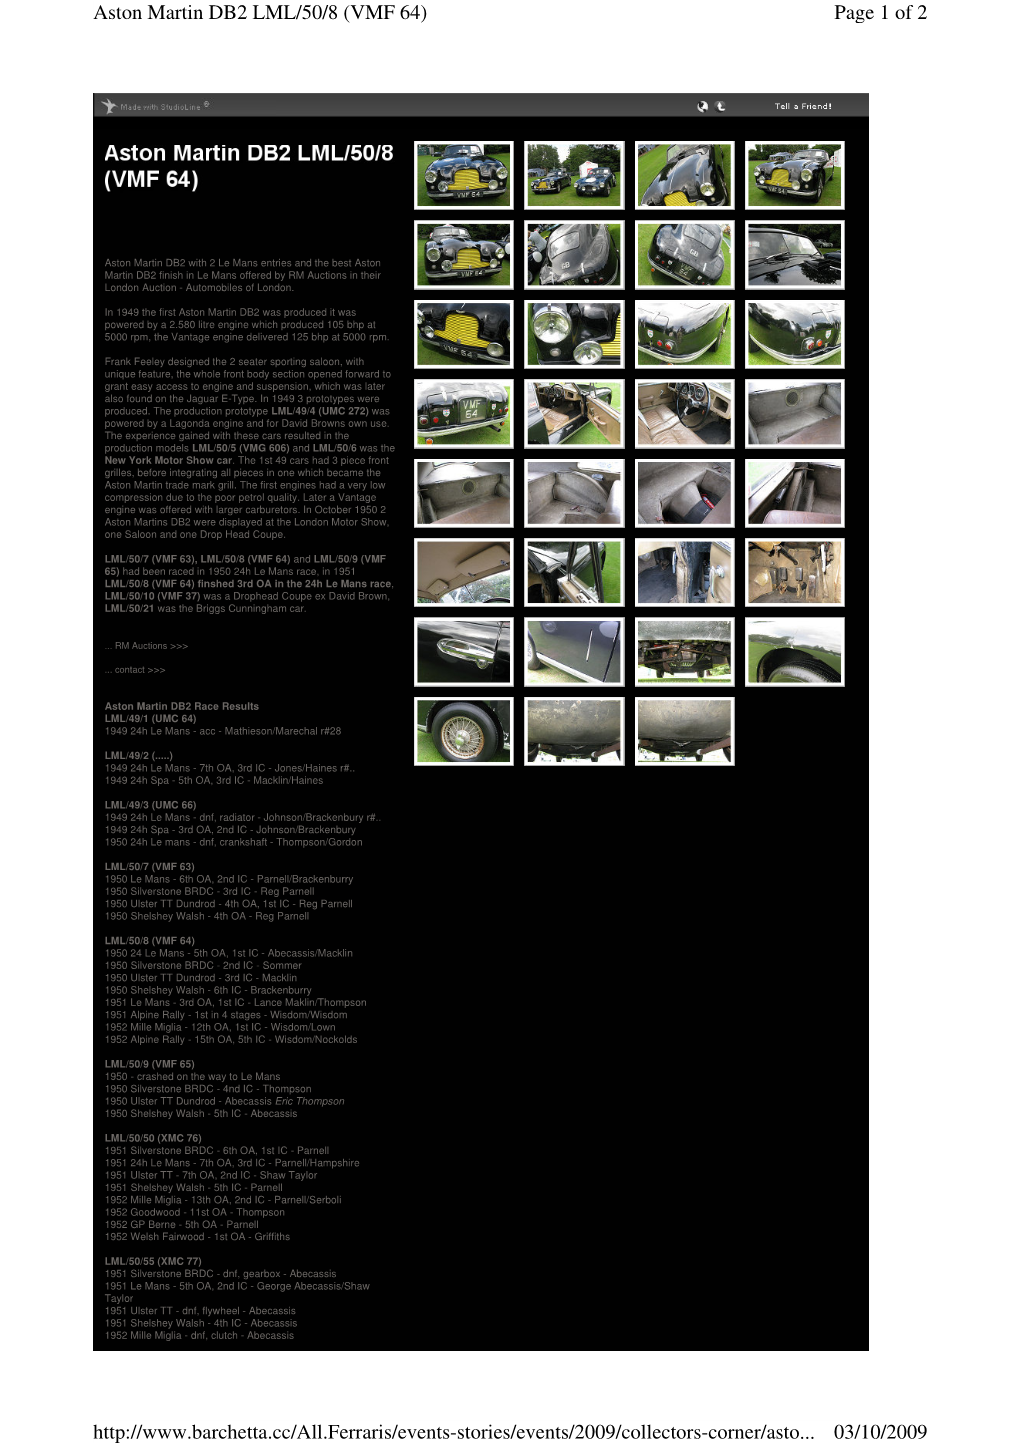 Page 1 of 2 Aston Martin DB2 LML/50/8 (VMF 64) 03/10/2009 Http